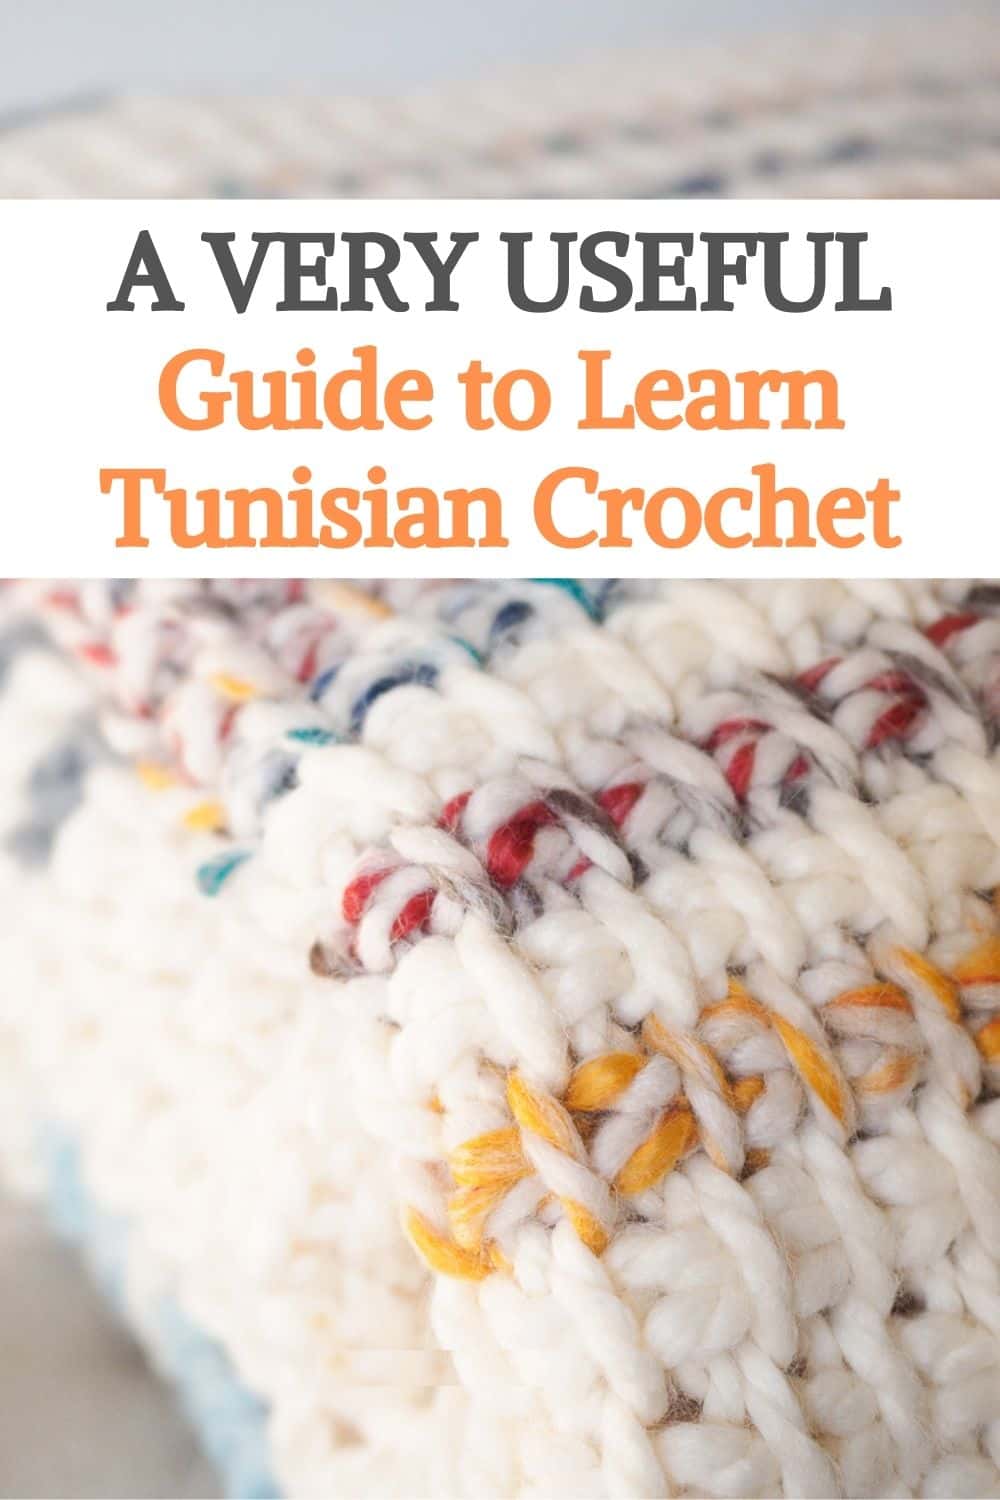 Guide to Learn Tunisian Crochet